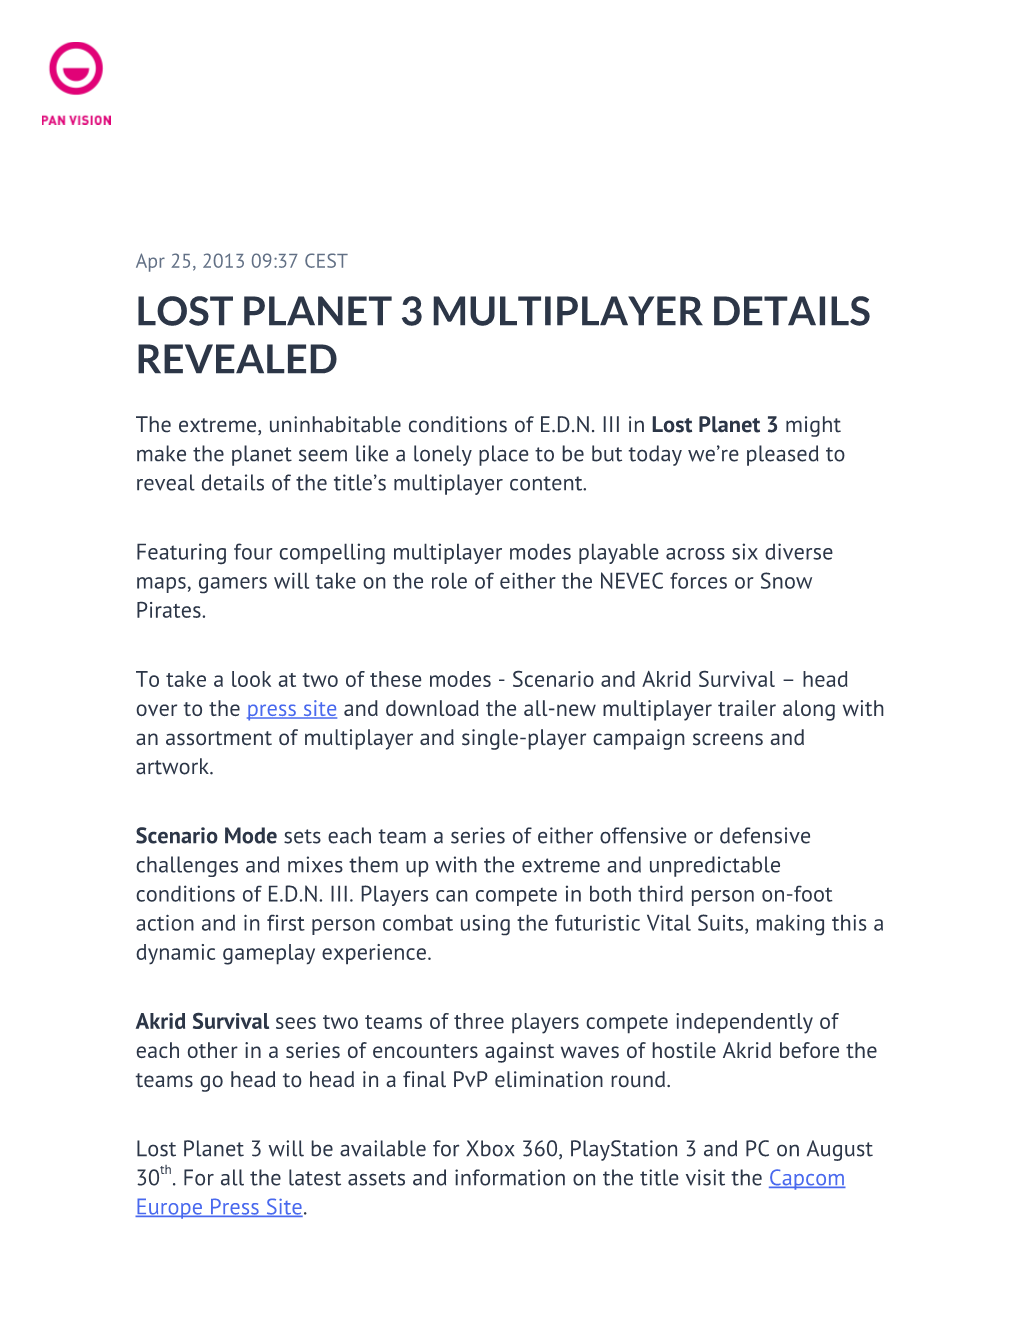 Lost Planet 3 Multiplayer Details Revealed